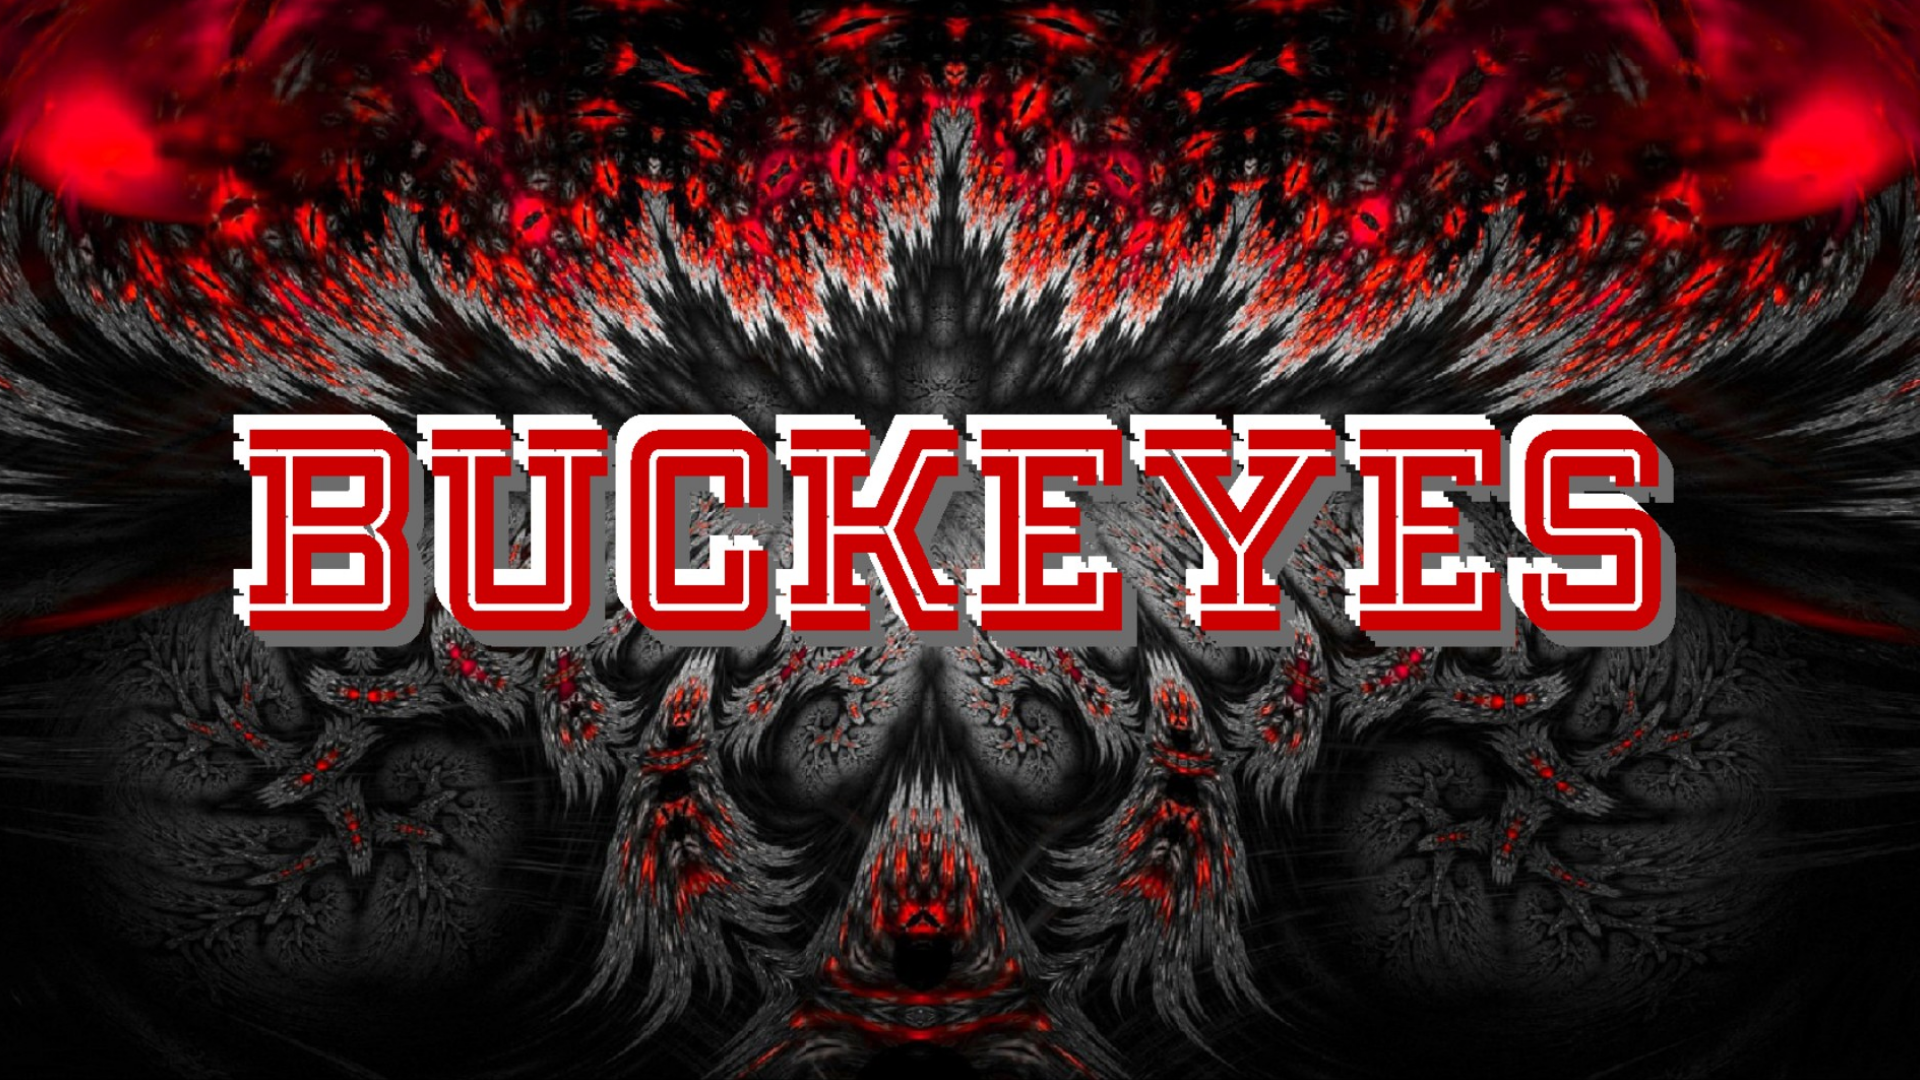 BUCKEYES ON AN ABSTRACT - Ohio State Buckeyes Wallpaper (30548079 ...